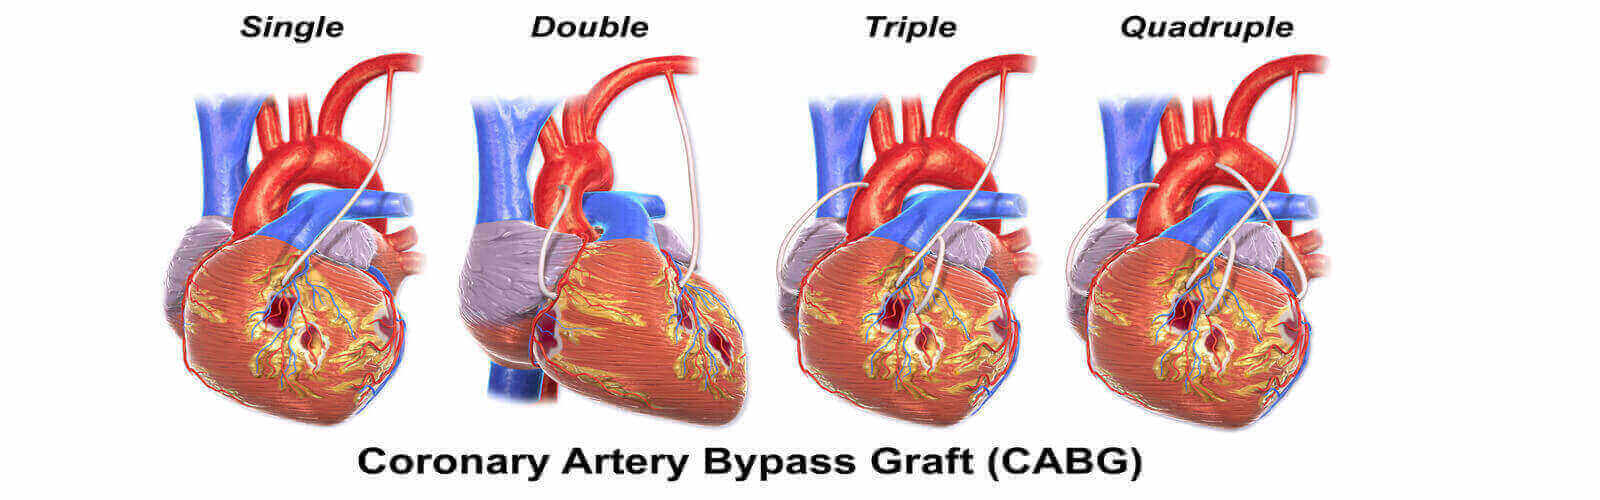 Coronary Artery Bypass Graft in Turkey